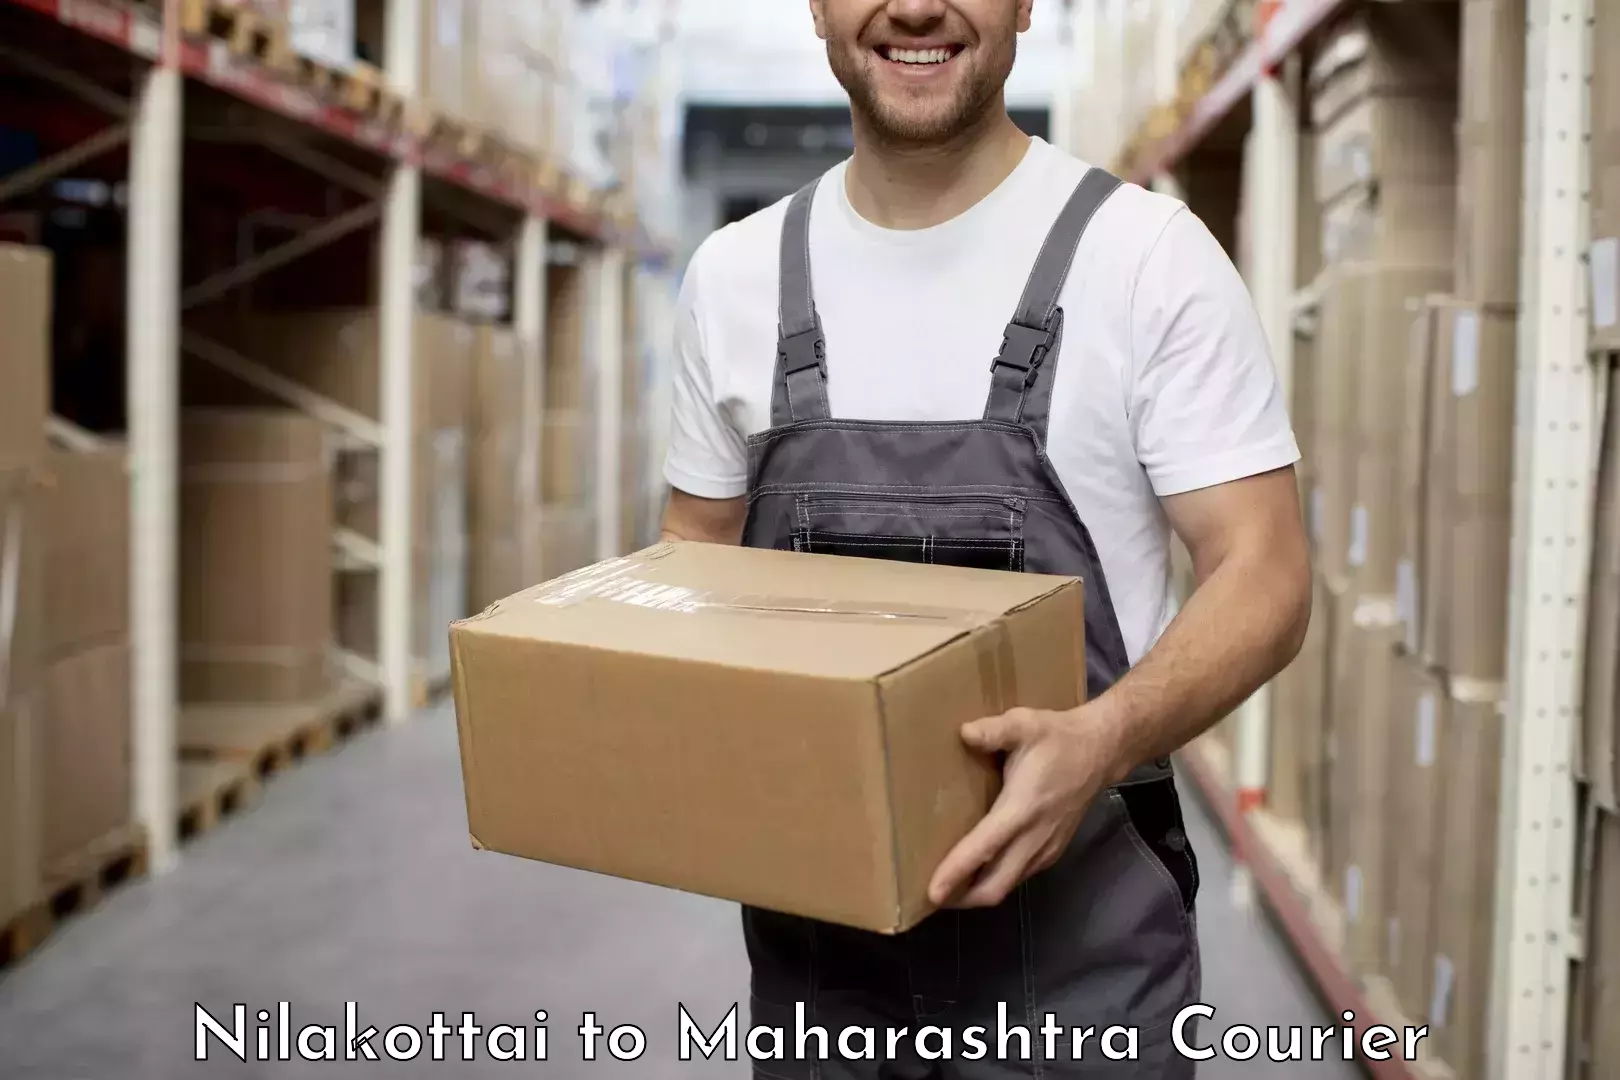 State-of-the-art courier technology Nilakottai to Mira Bhayandar